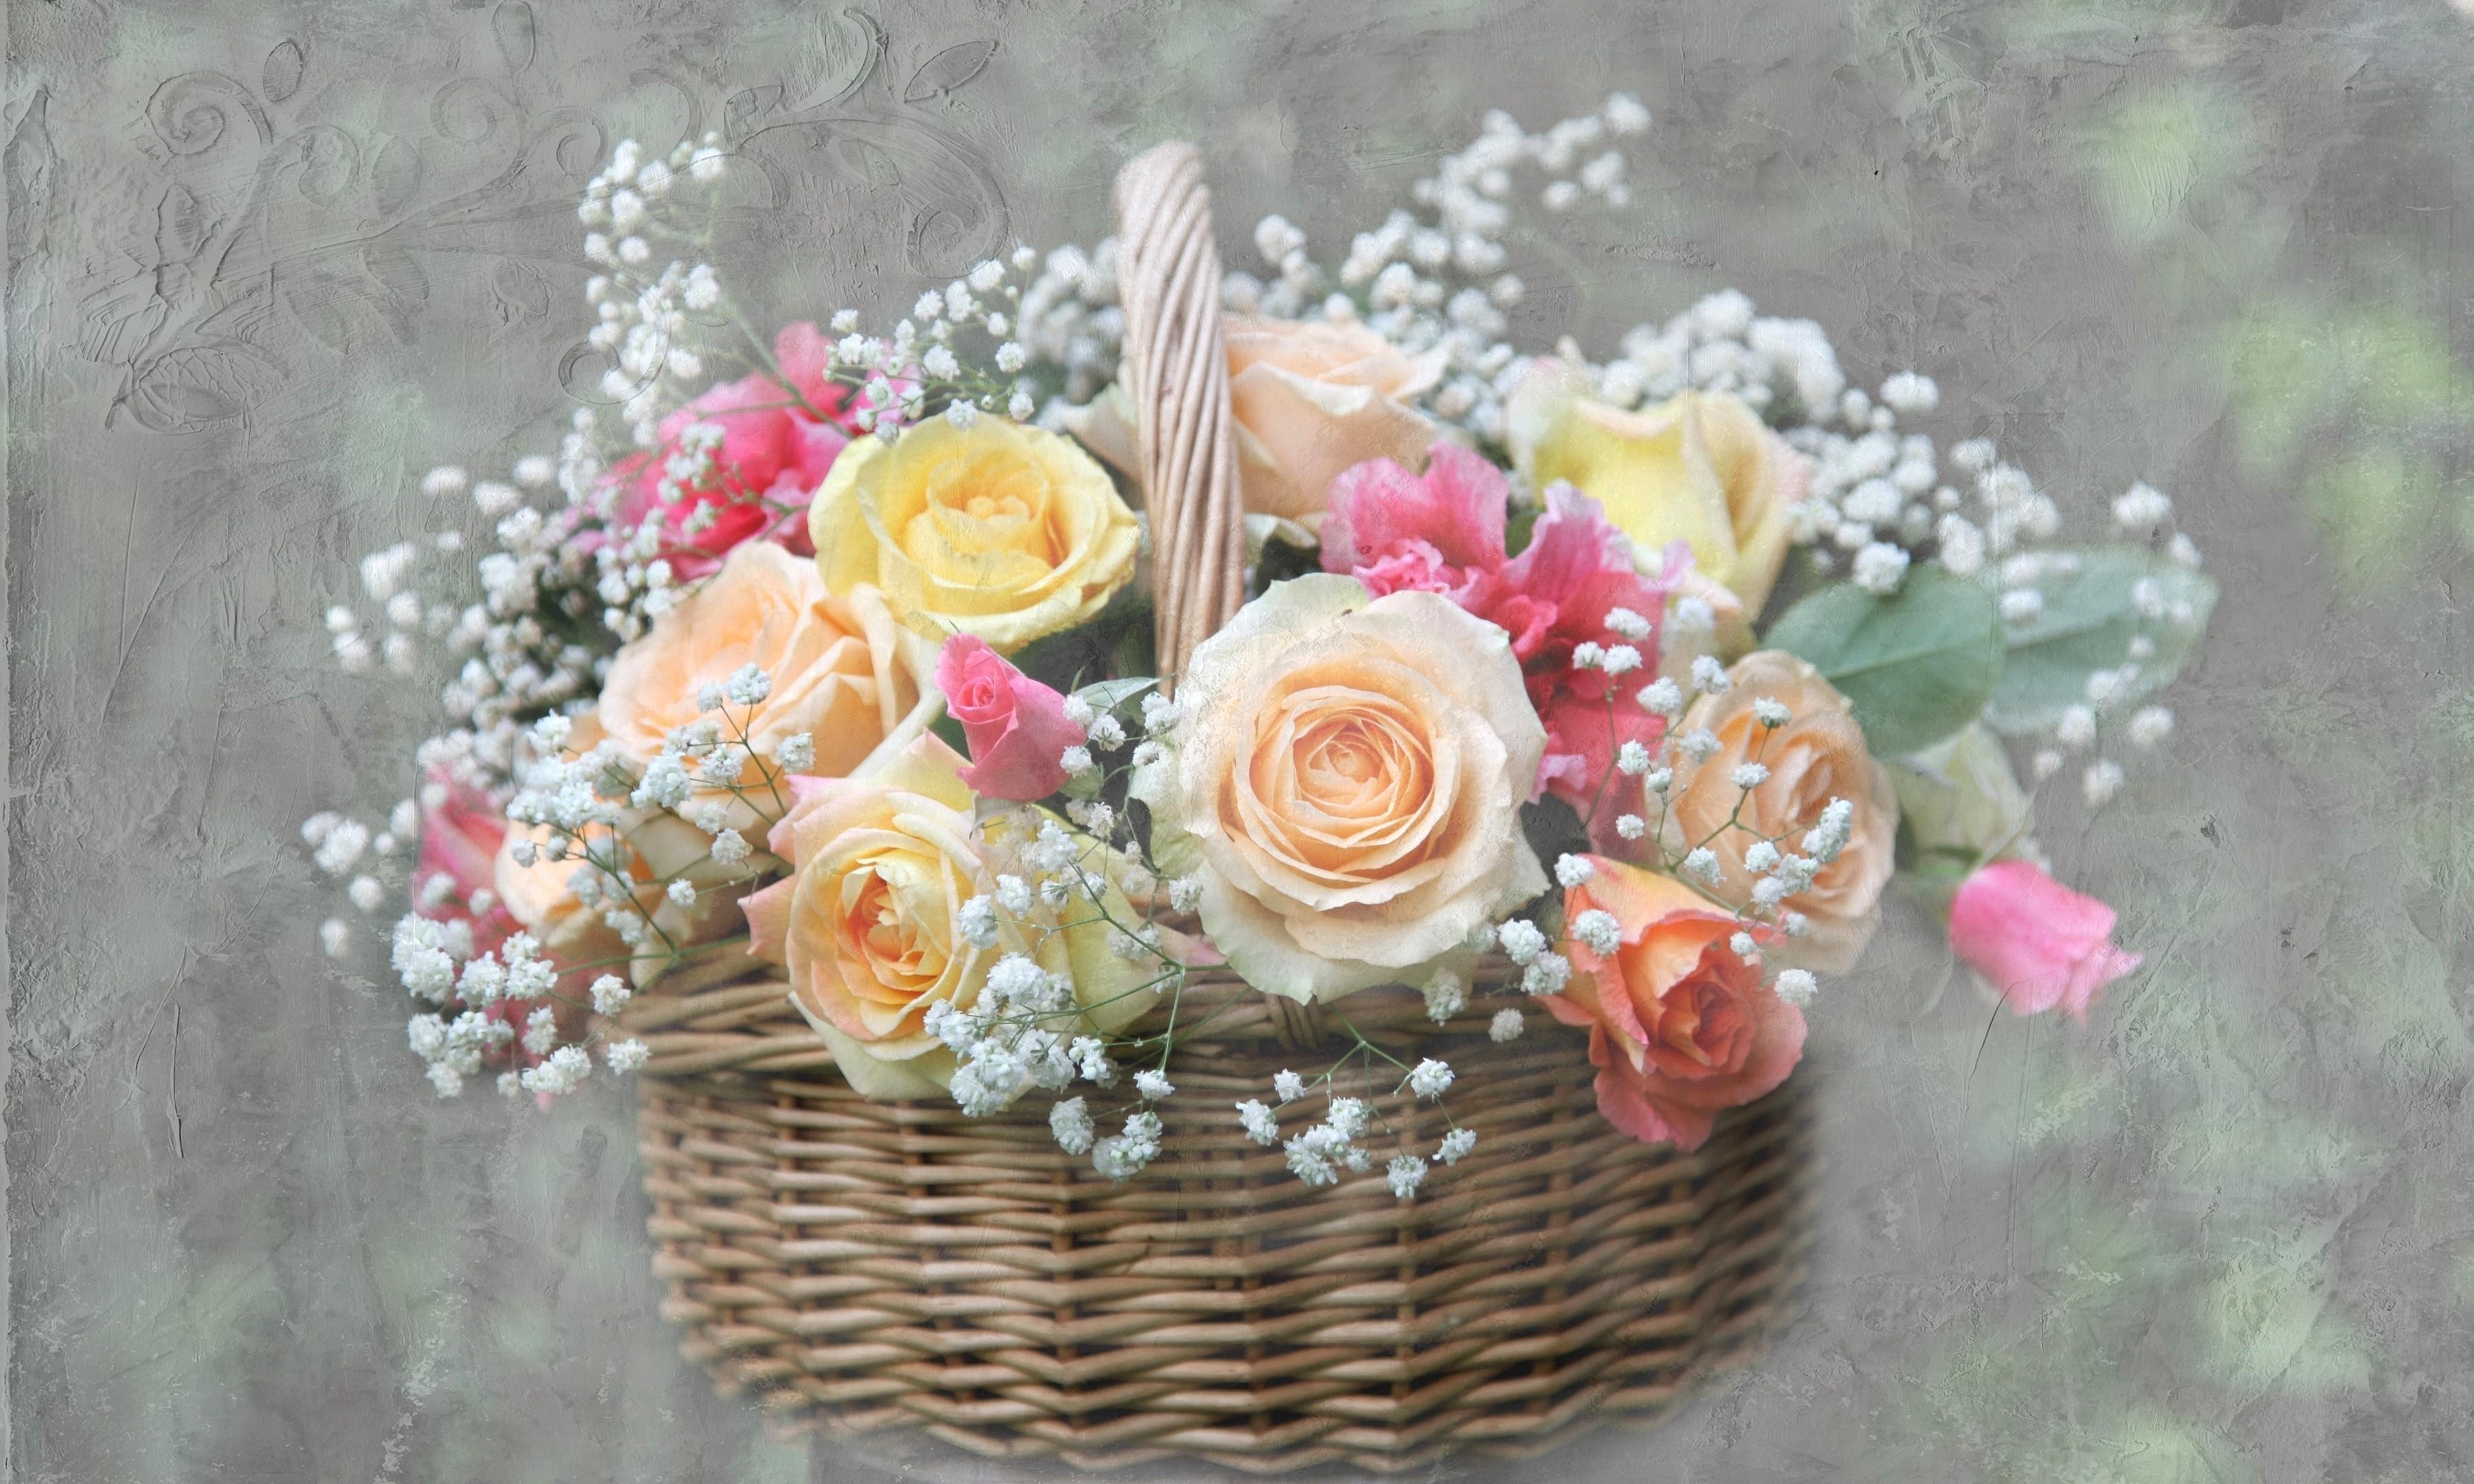 roses, flowers, gypsophilus, gipsophile, basket